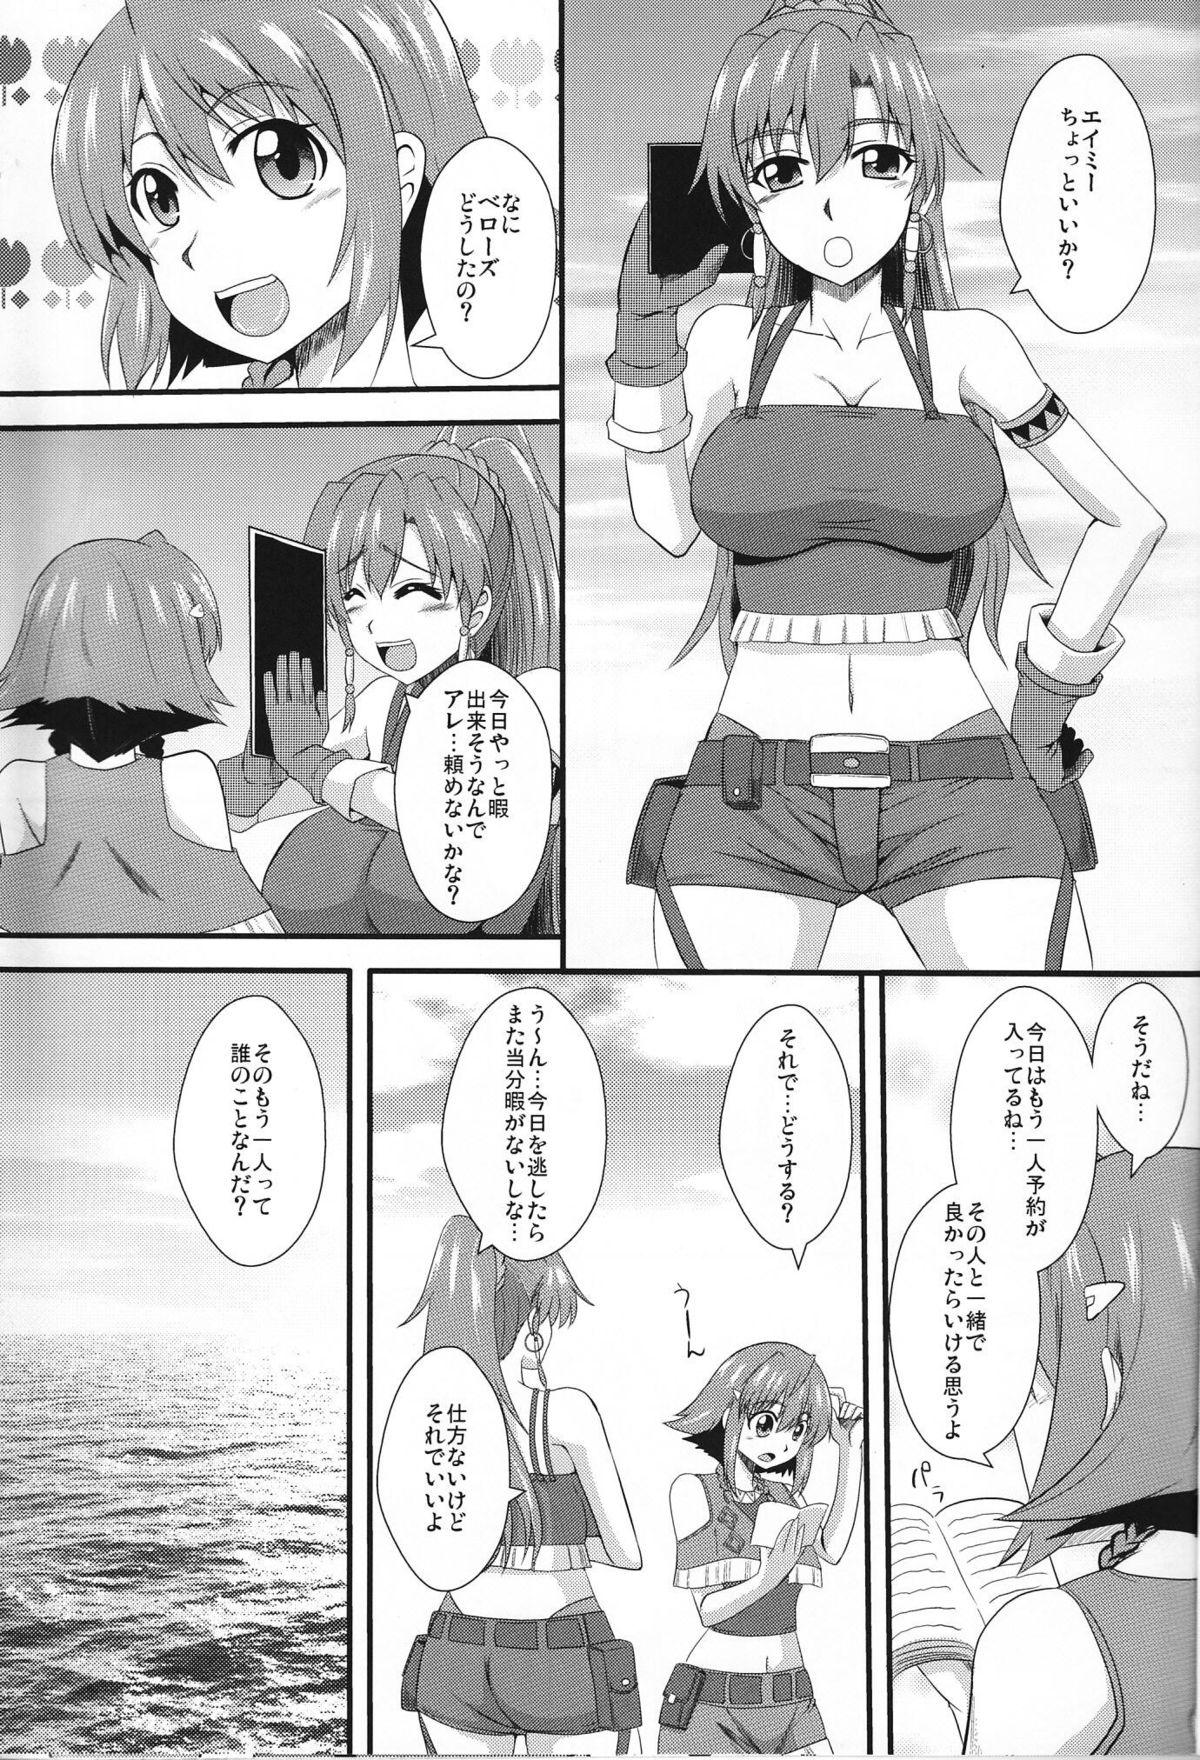 Stretch Shoukan no Gargantia - Suisei no gargantia Sexy Girl - Page 2